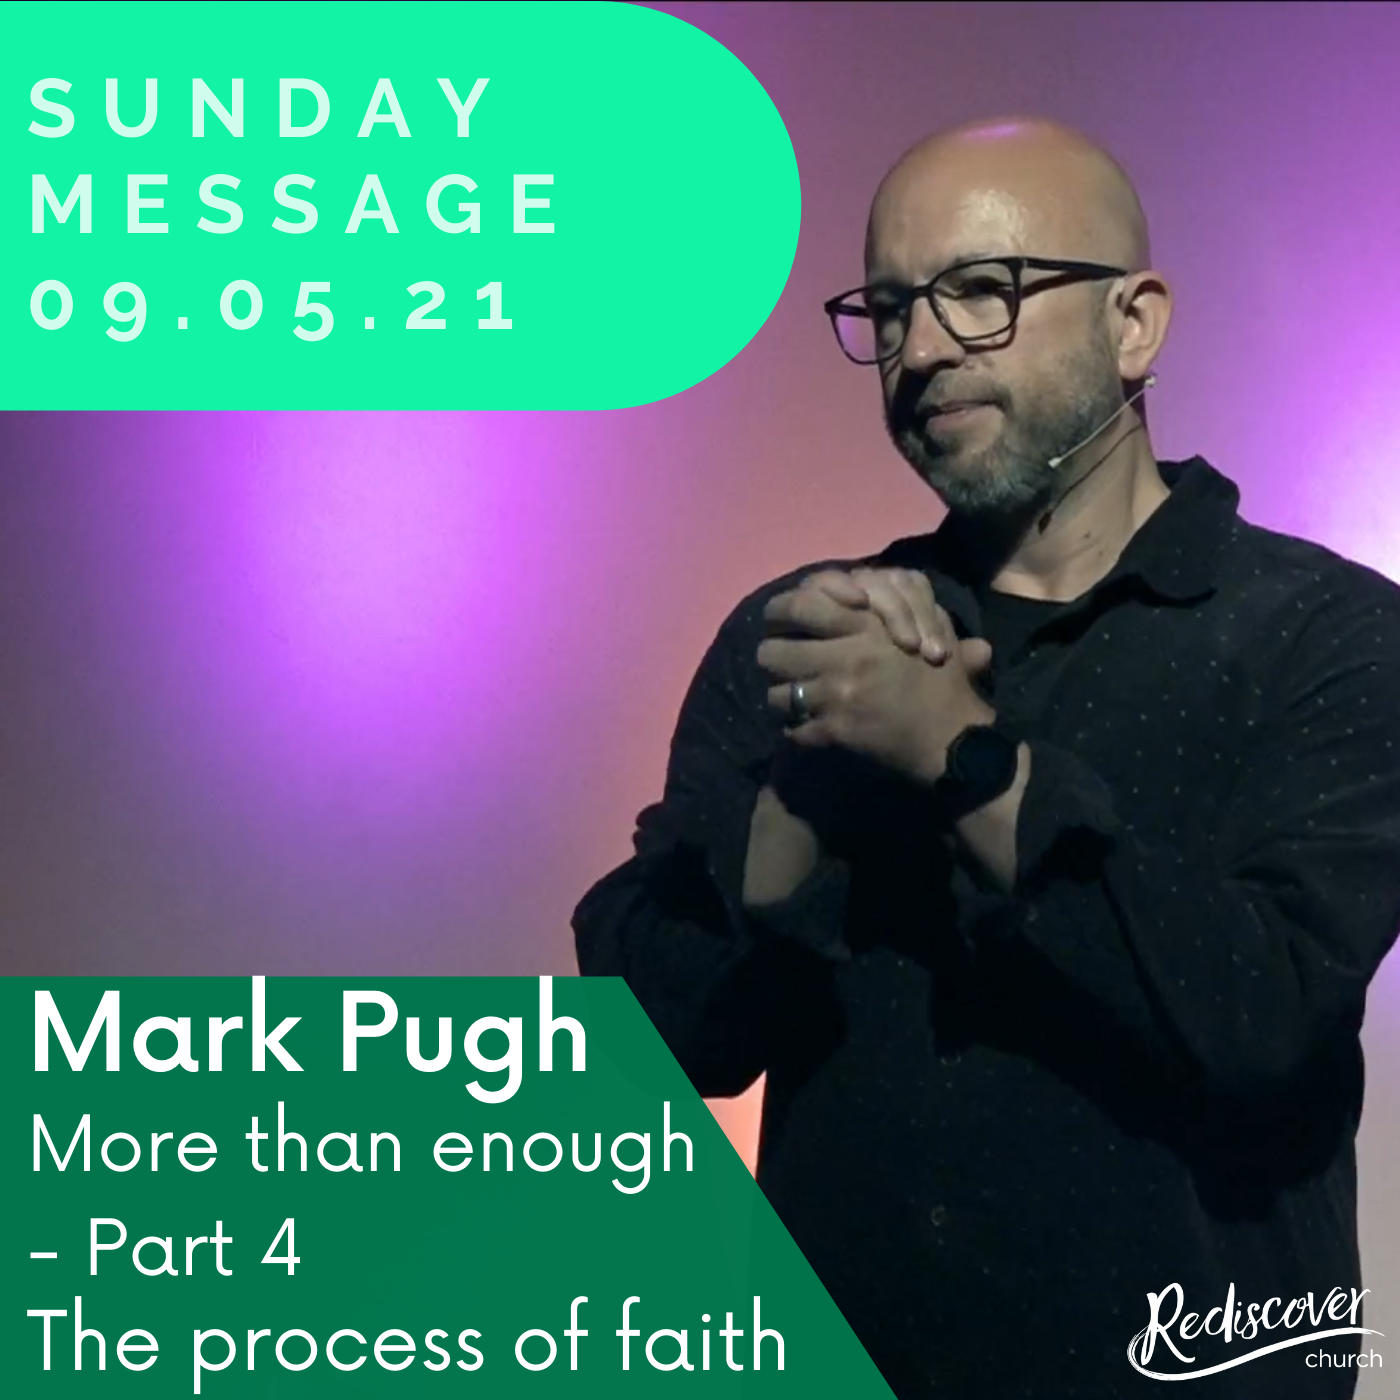 Mark Pugh - Sunday Message | More than enough - Part 4 | The process of faith